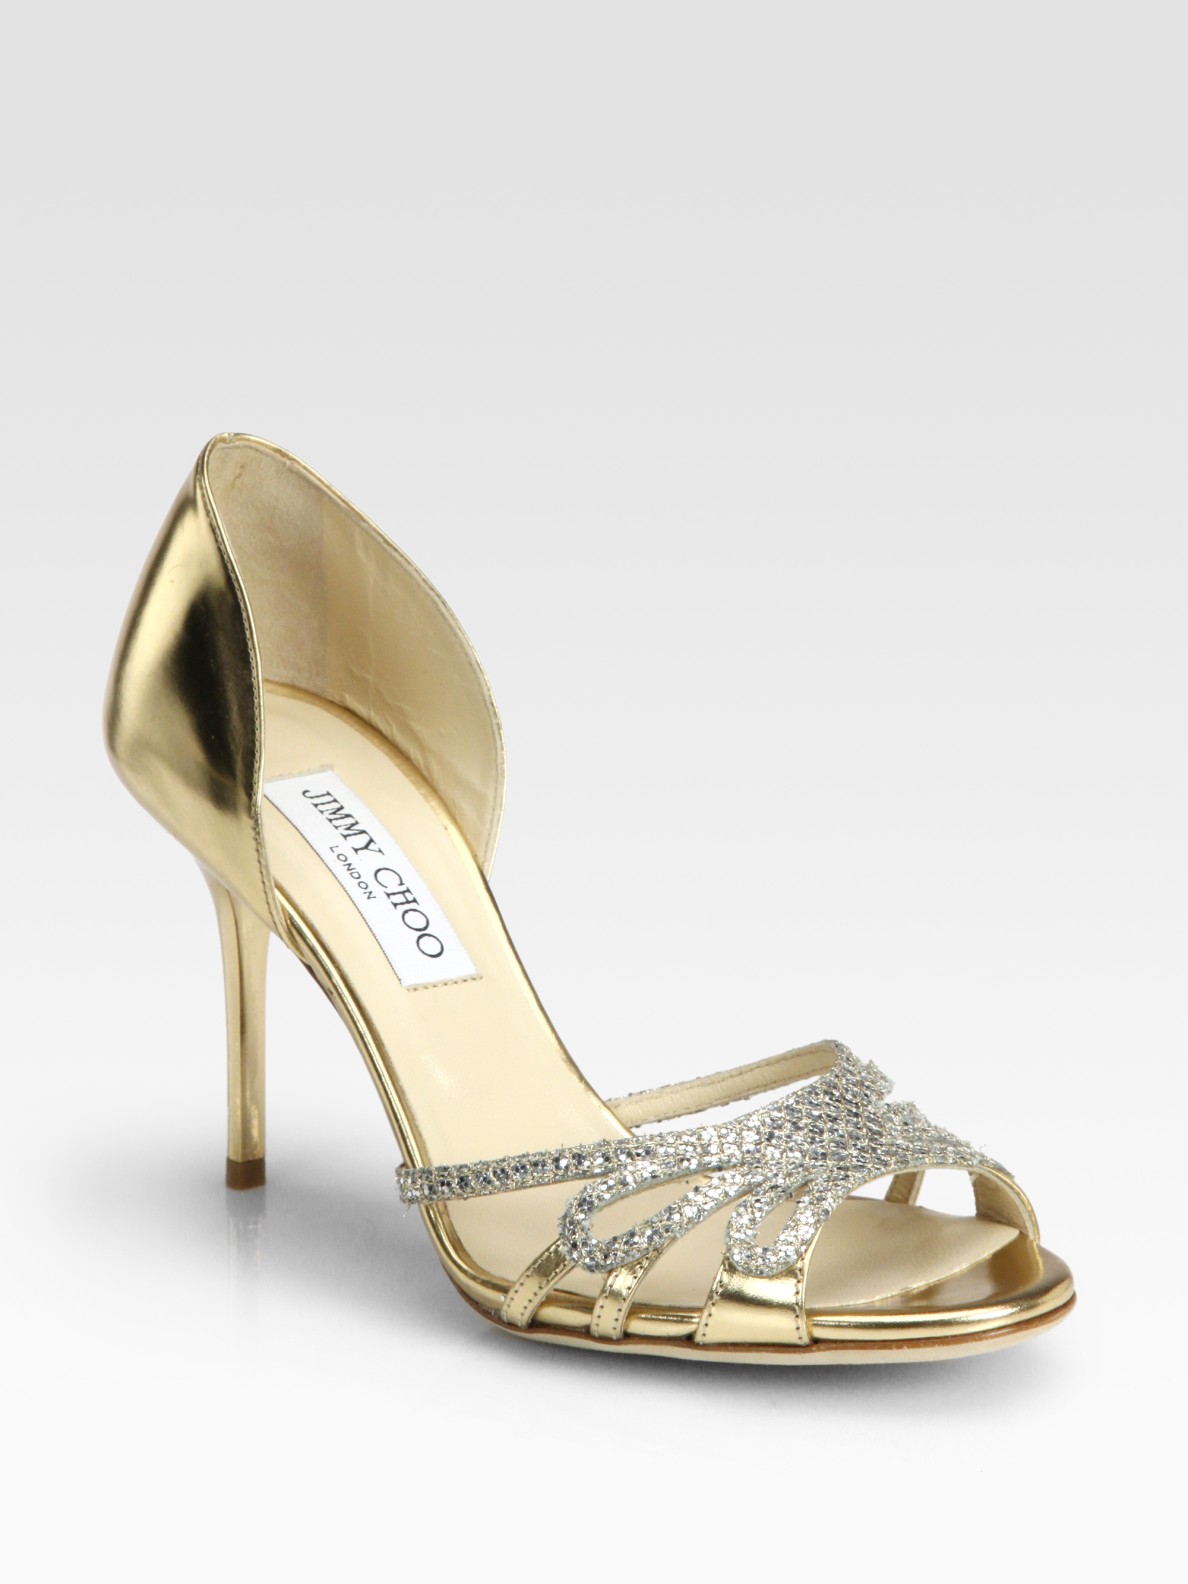 Jimmy Choo Mocha Glitter Metallic Leather Sandals in Gold | Lyst